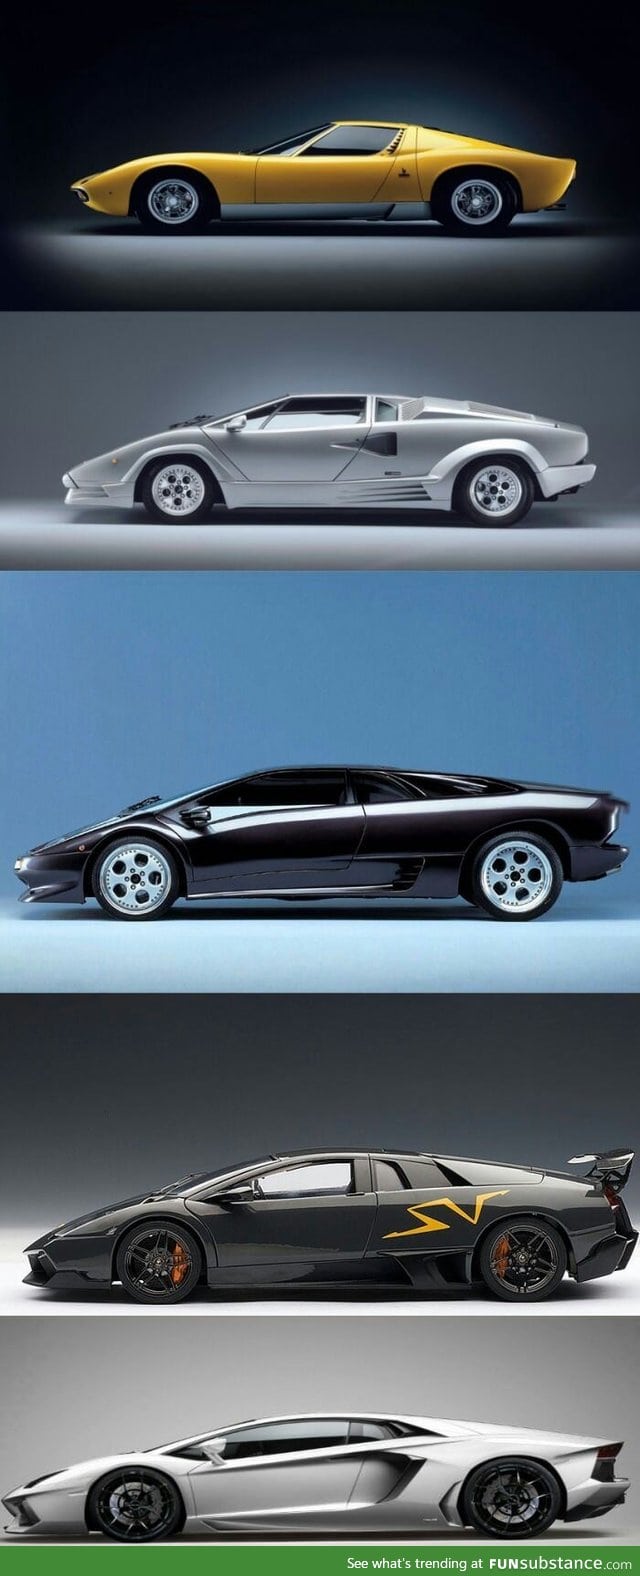 Five generations of the Lamborghini family